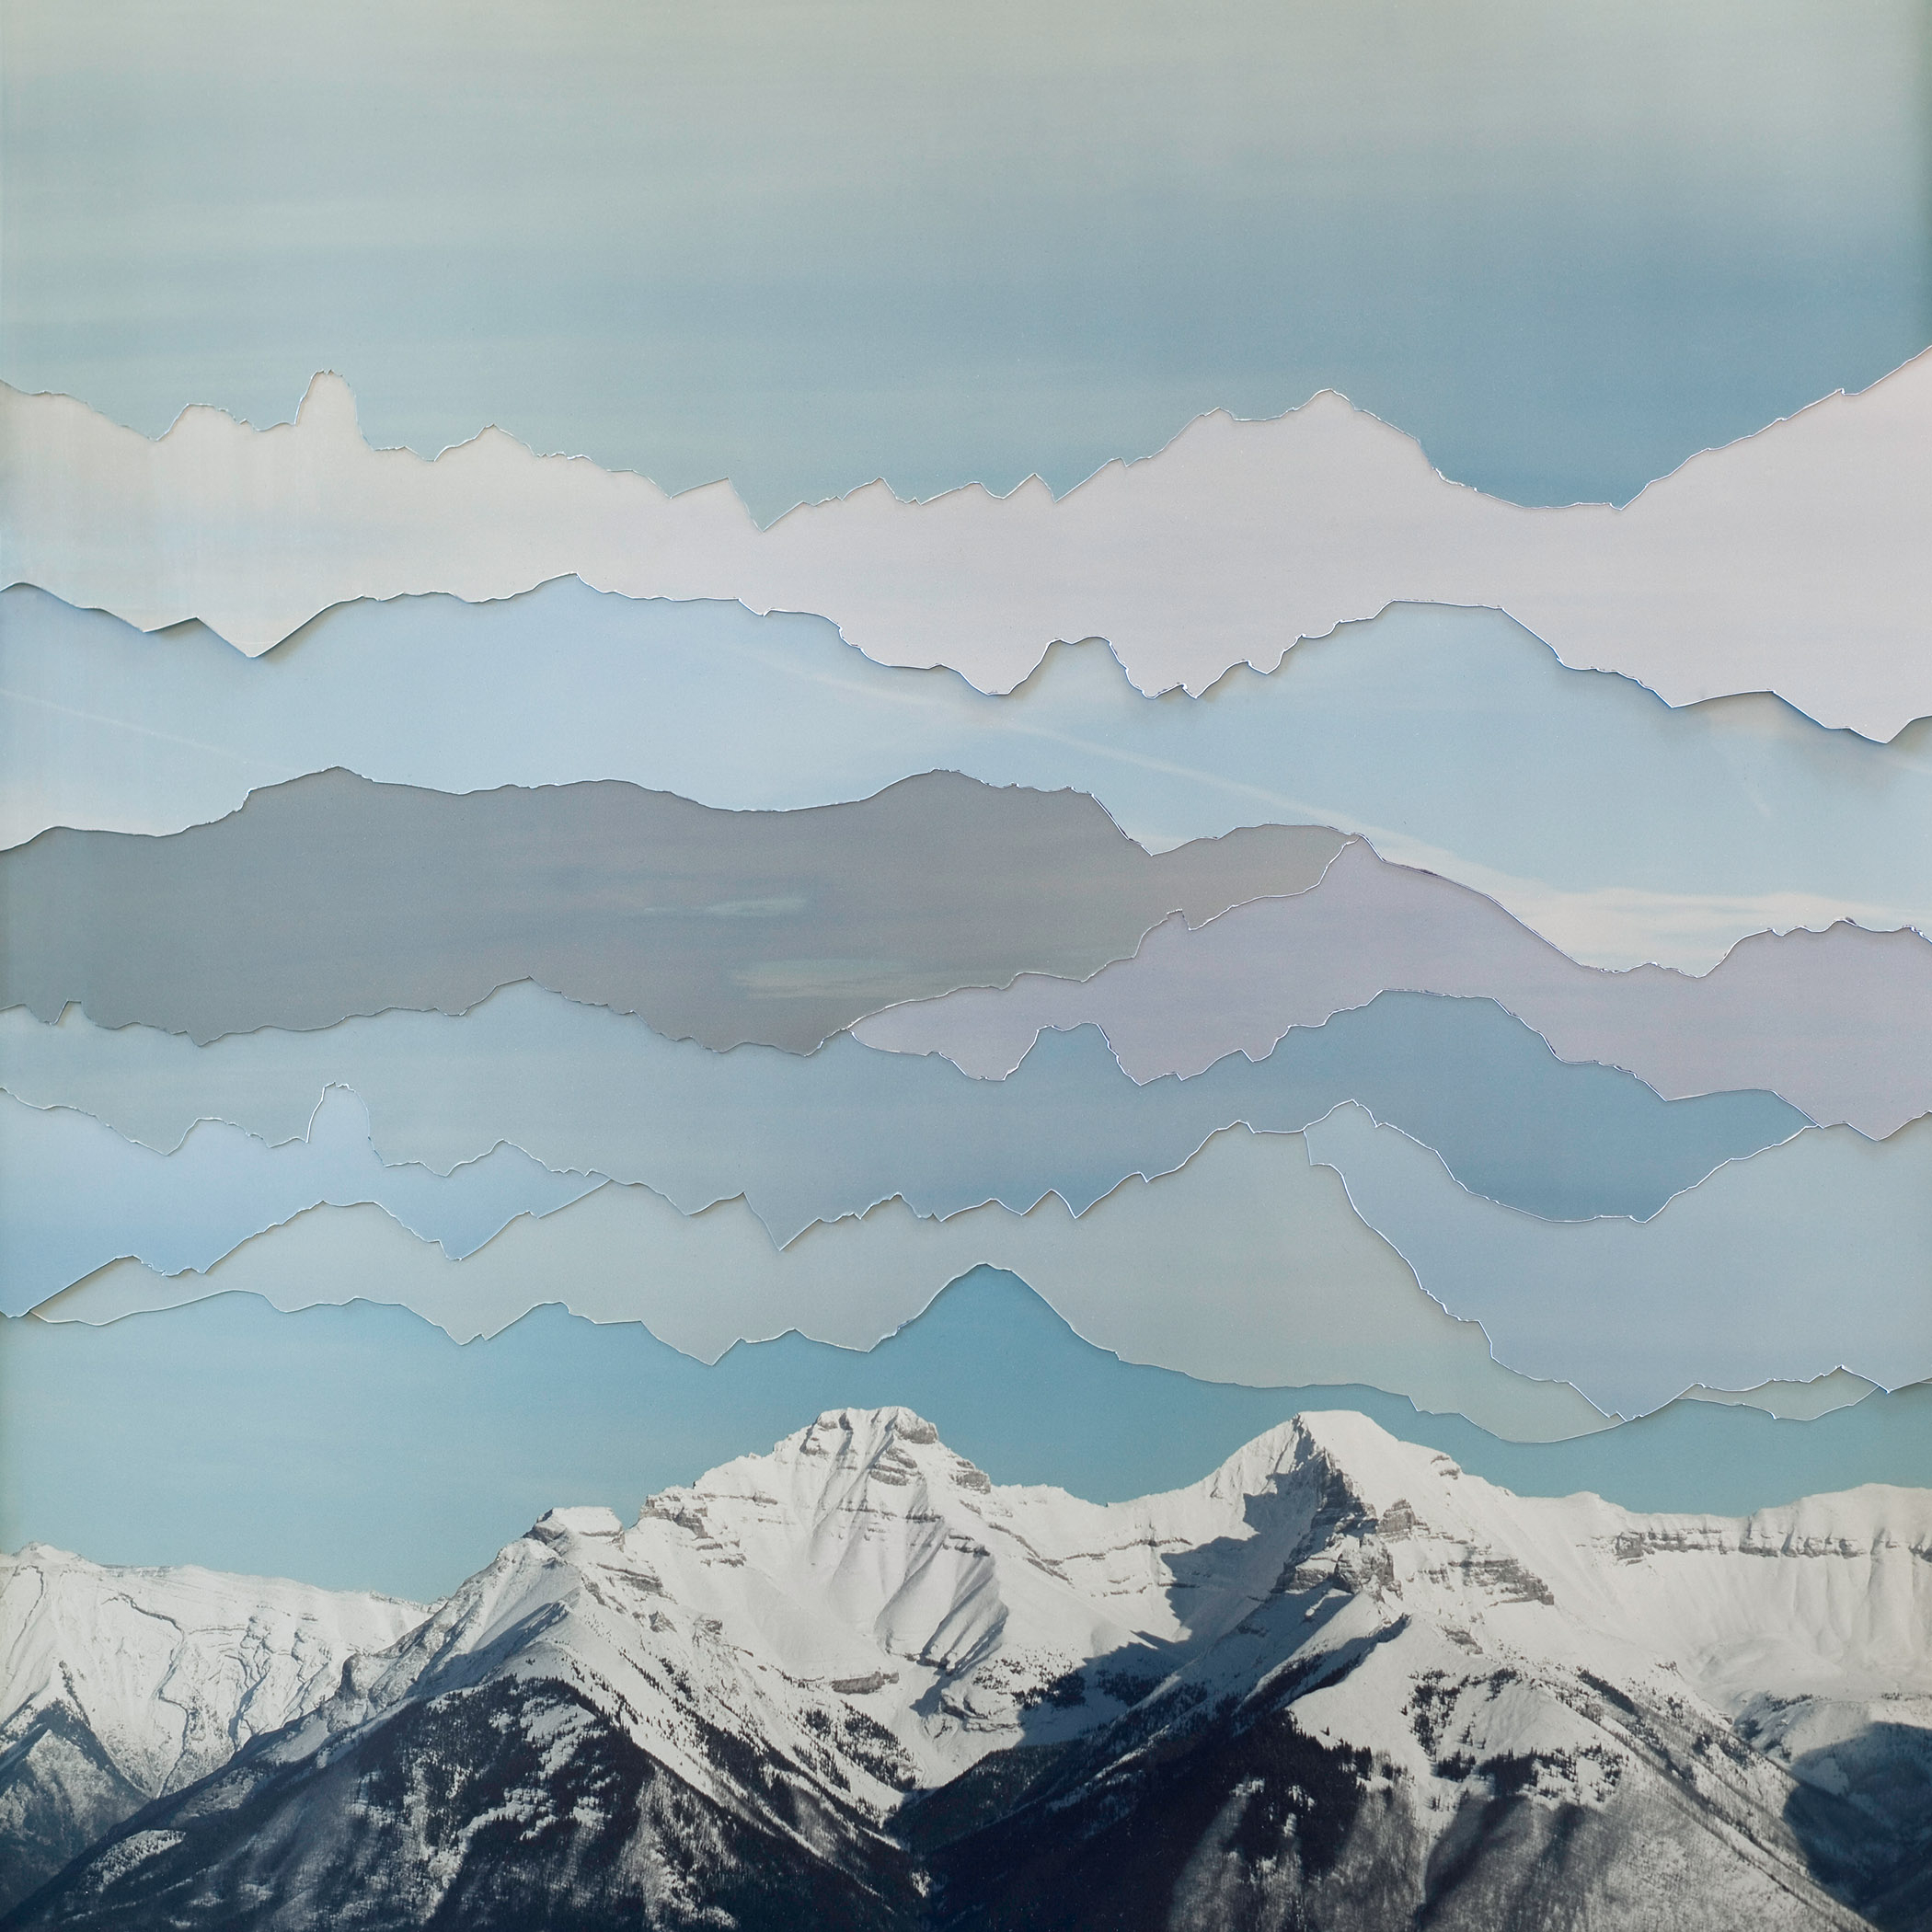     Becky Comber, Banff Sky, from the series Broken Horizons, 2013 

